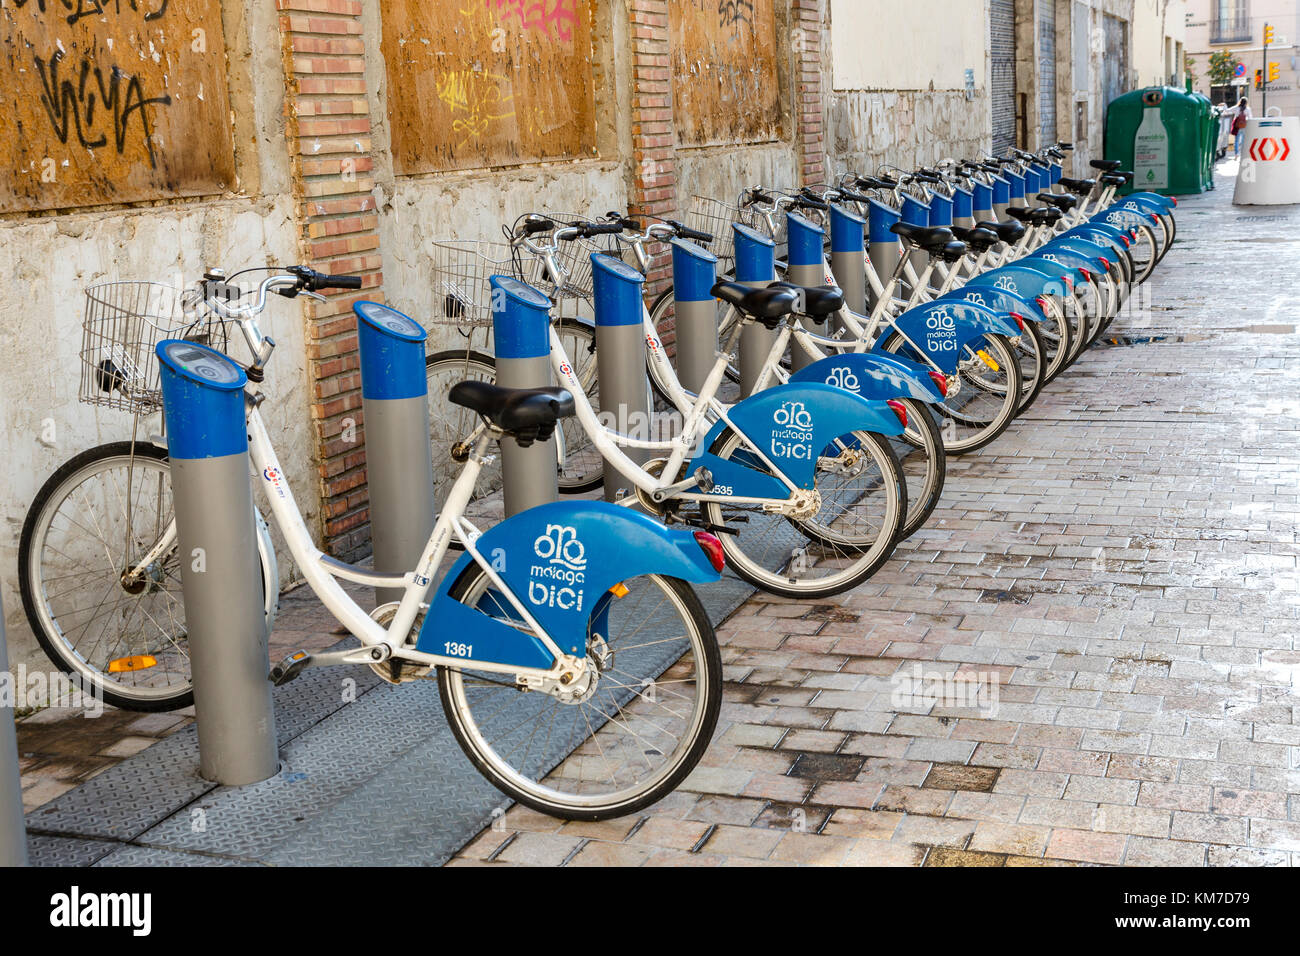 Servicio de Alquiler de bicicletas Bici Málaga, España Fotografía de stock  - Alamy